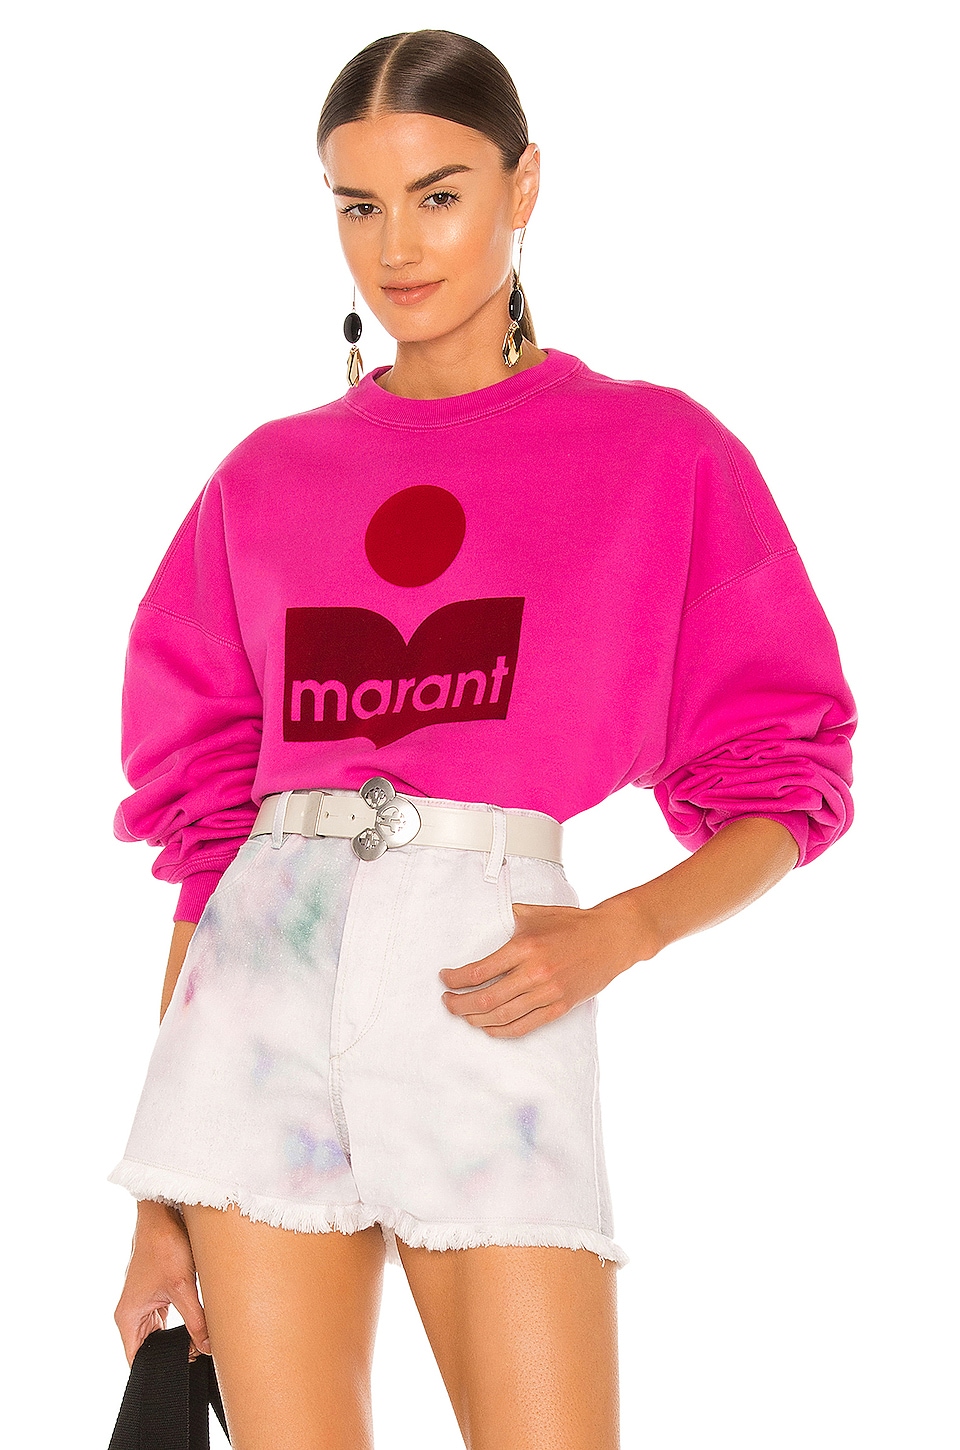 matron Tilintetgøre stang Isabel Marant Etoile Mindy Sweatshirt in Neon Pink | REVOLVE